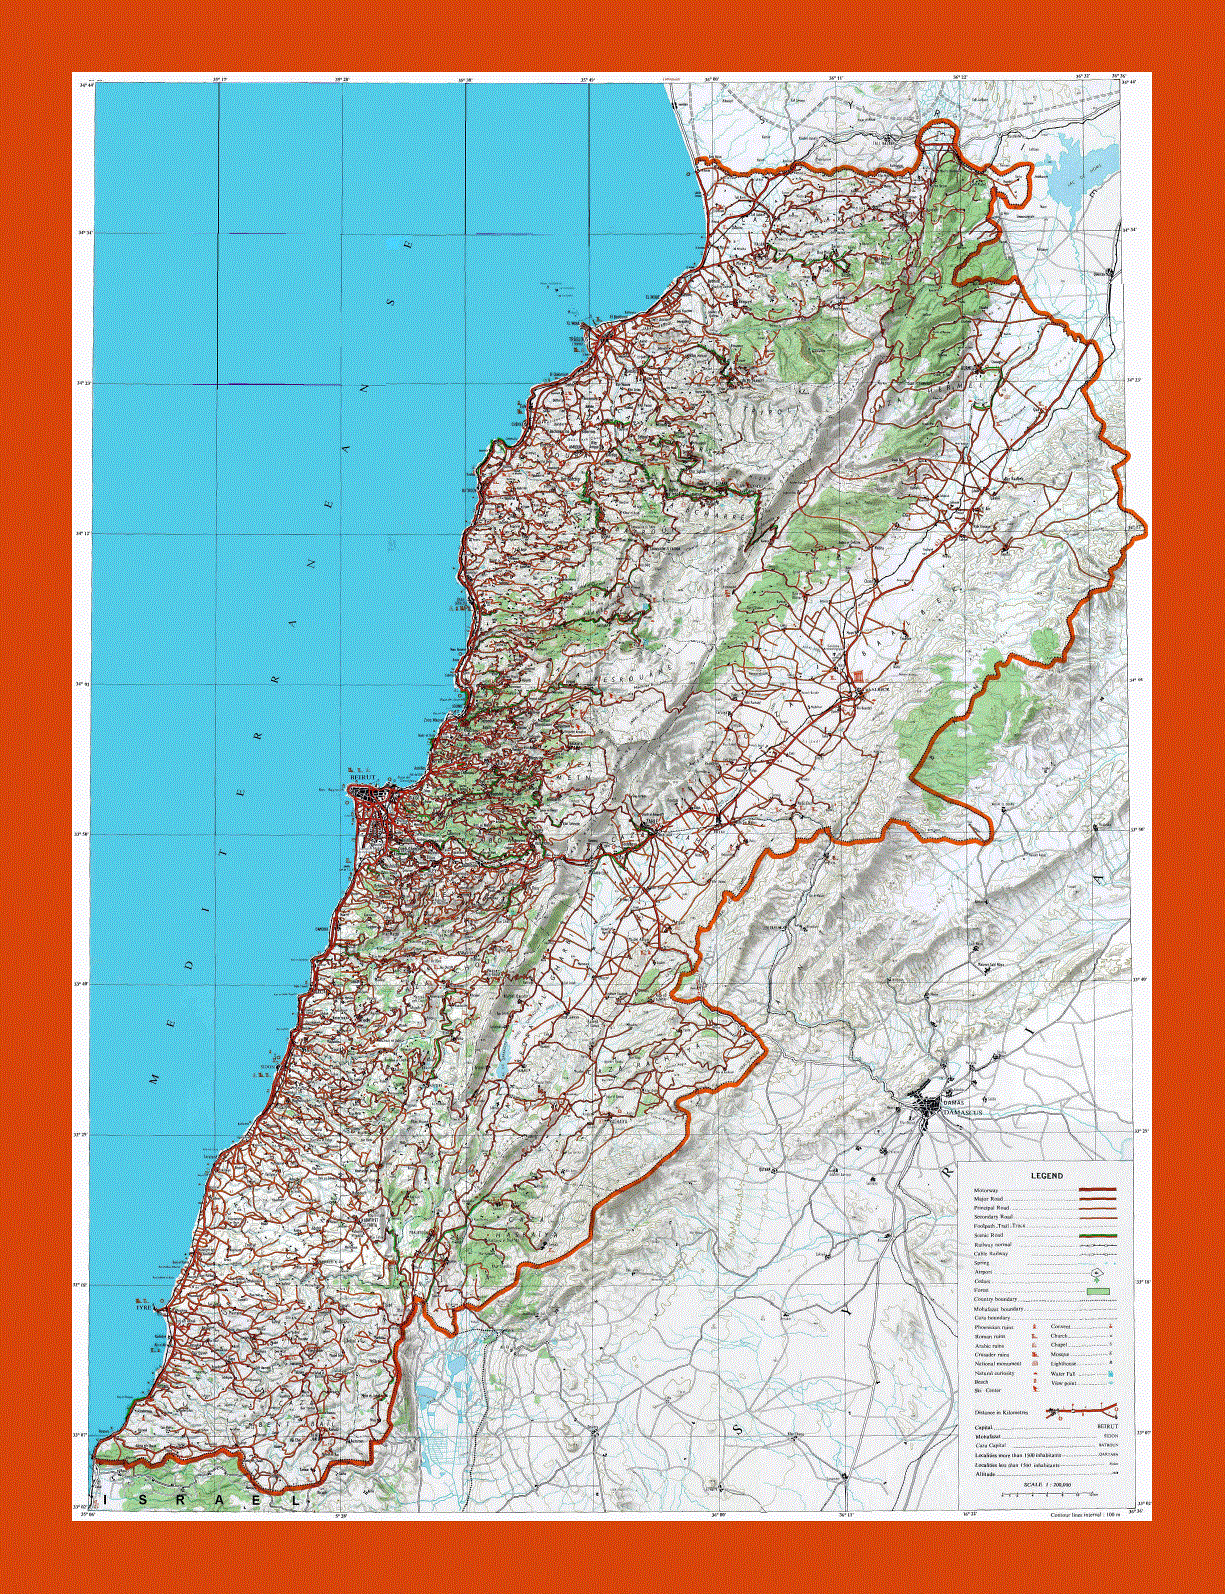 Topographical map of Lebanon